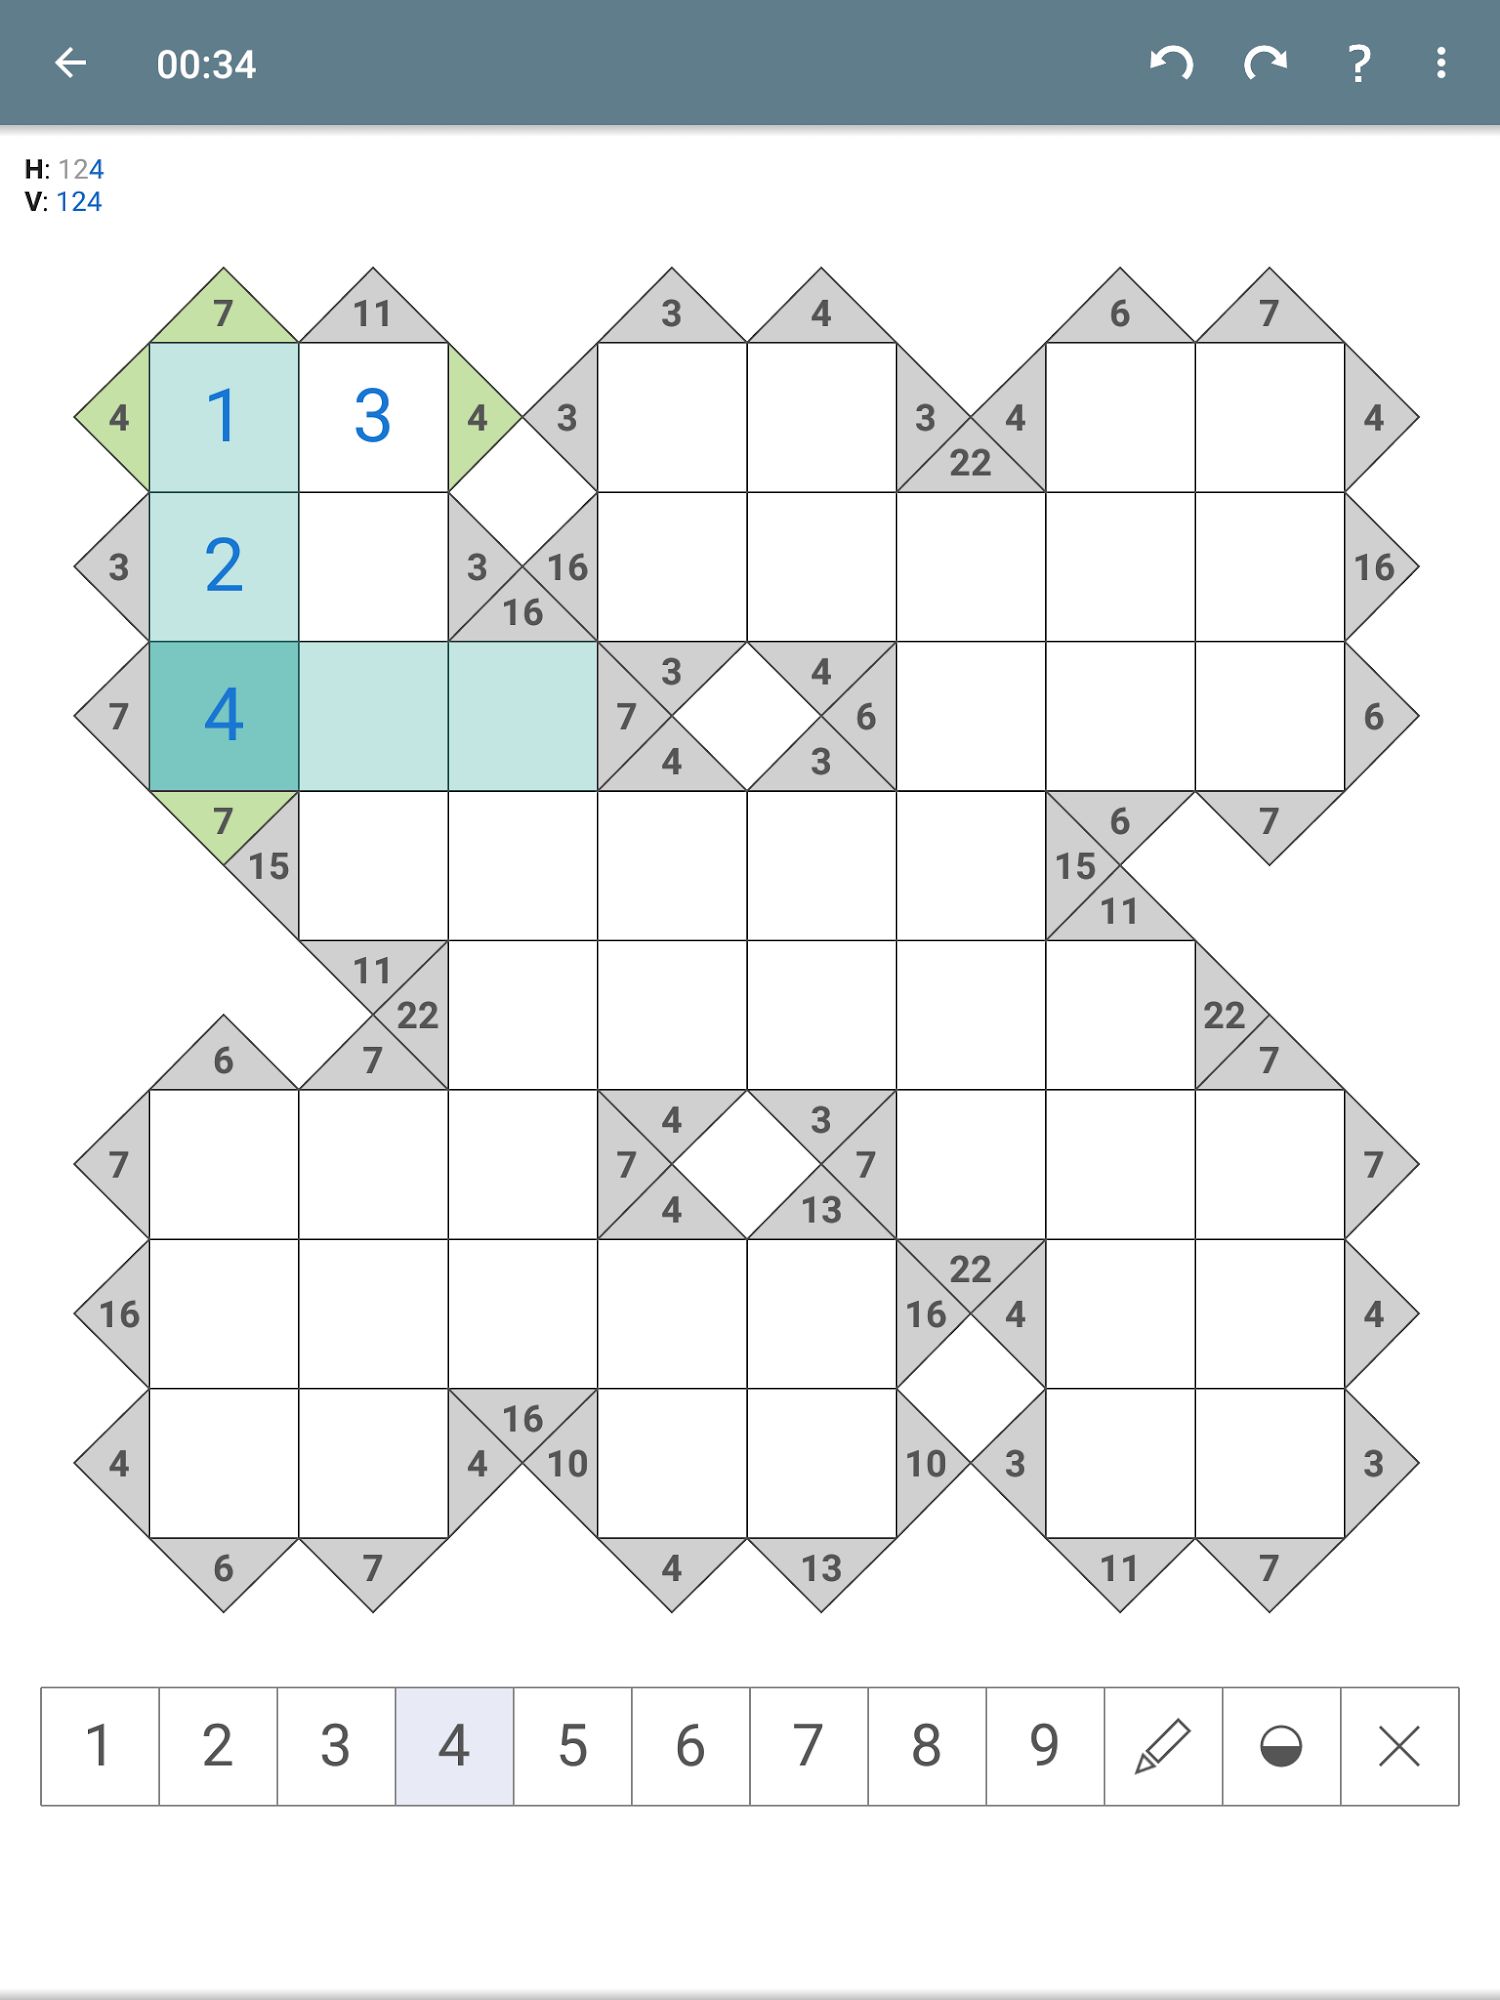 Download Kakuro (Cross Sums) - Classic Puzzle Game für Android kostenlos.